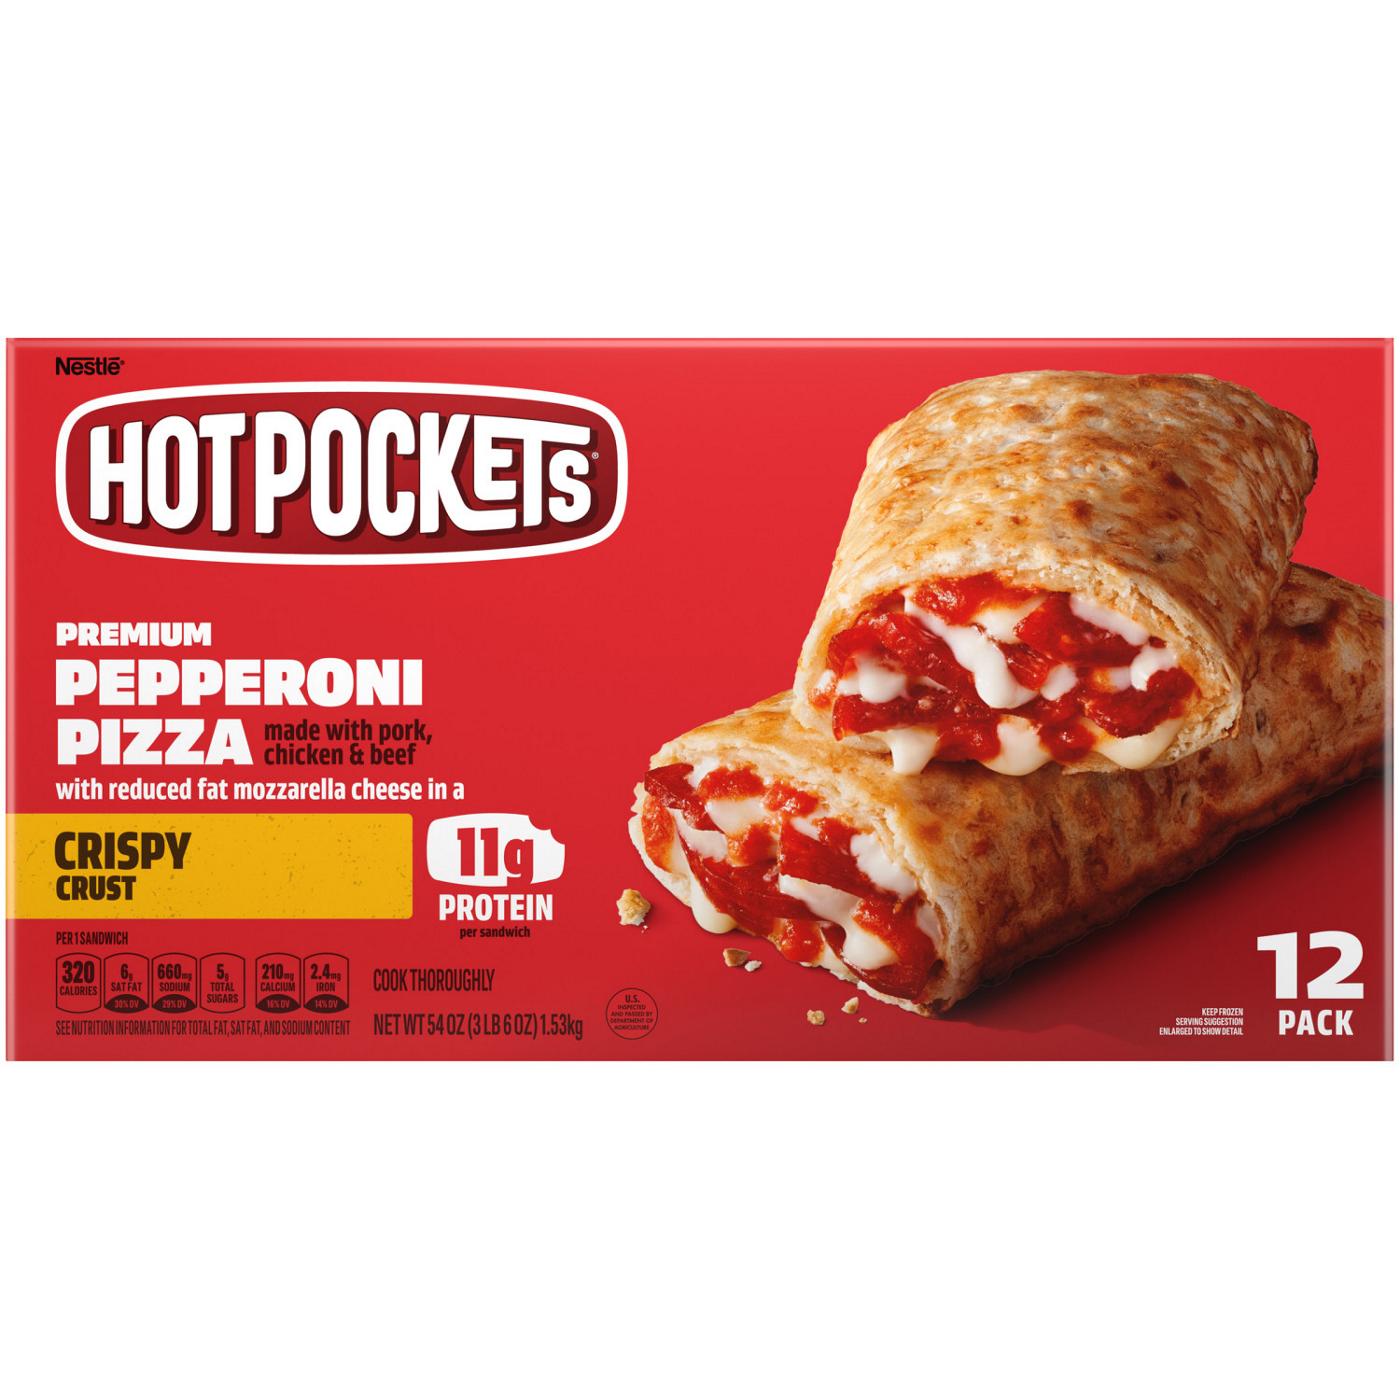 Hot Pockets Pepperoni Pizza Frozen Sandwiches - Crispy Crust; image 1 of 7